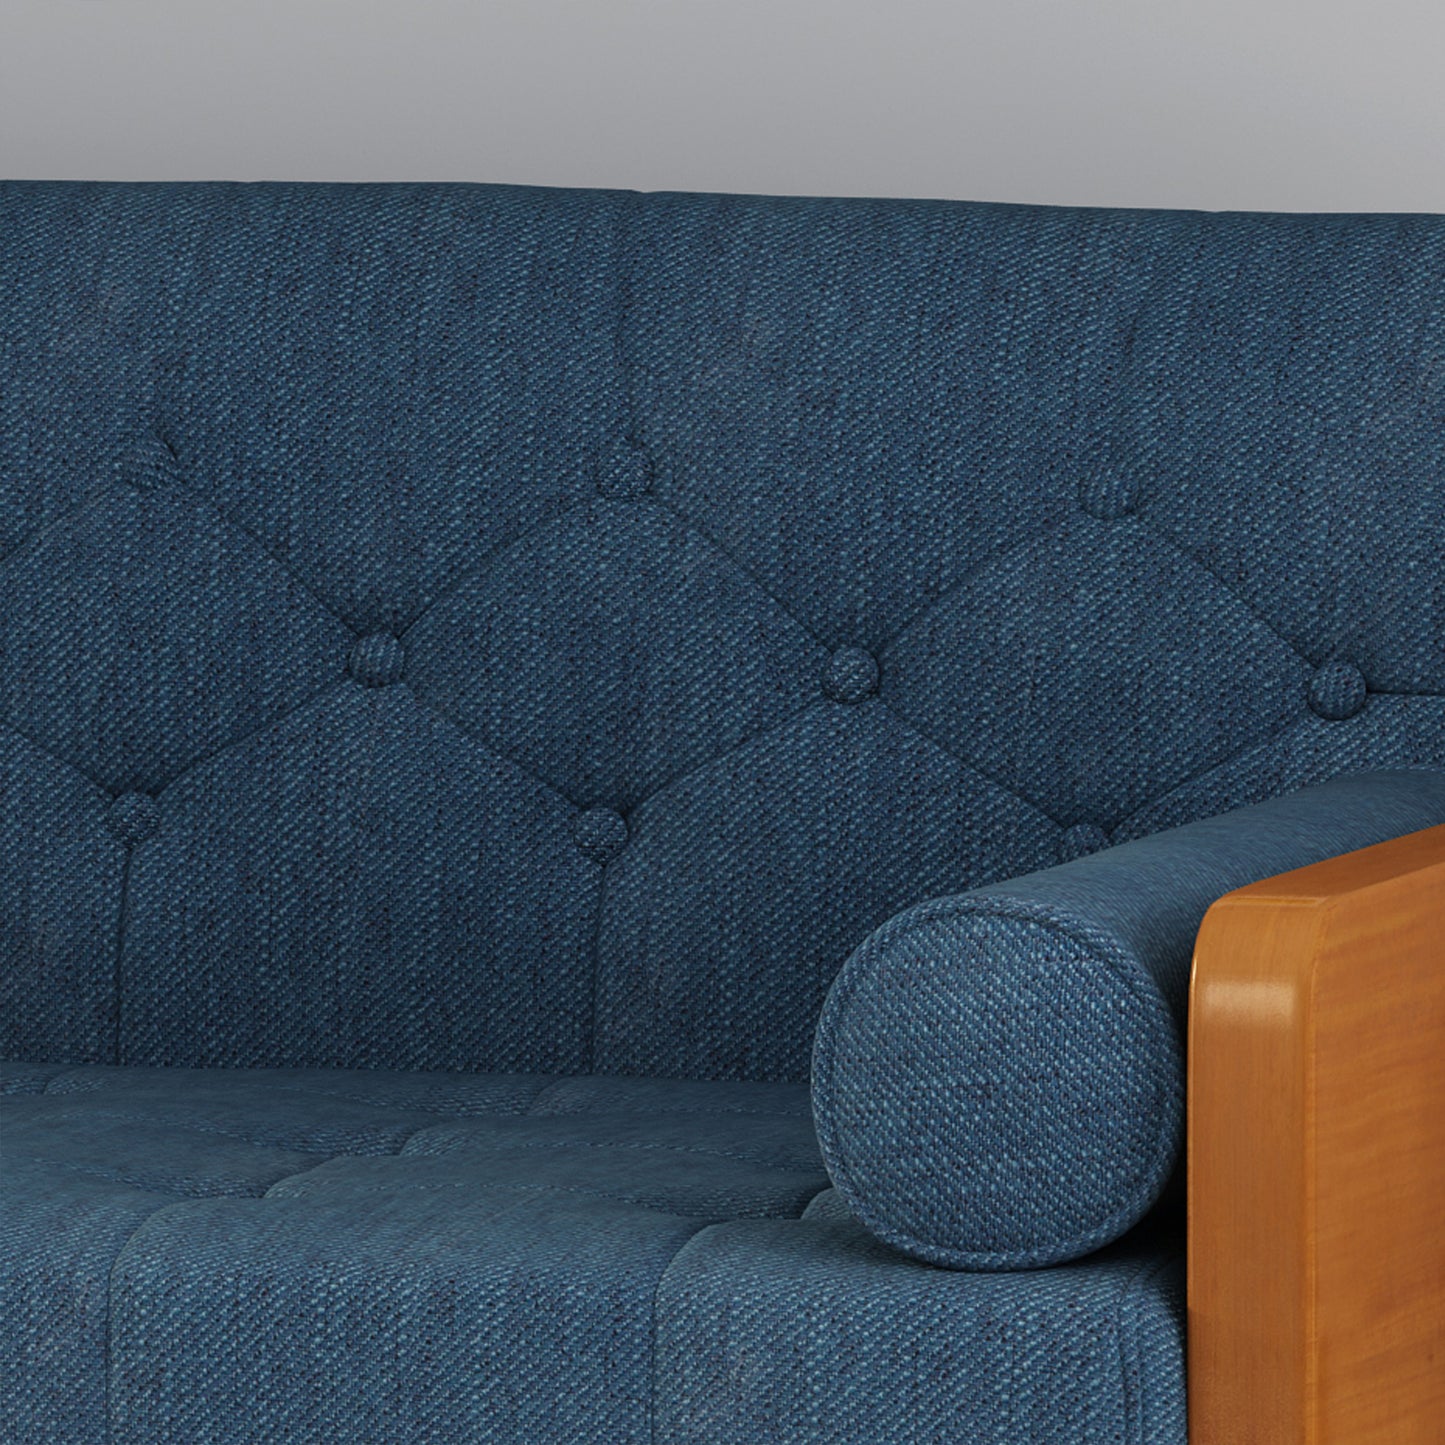 Aidan Mid Century Modern Tufted Fabric Sofa